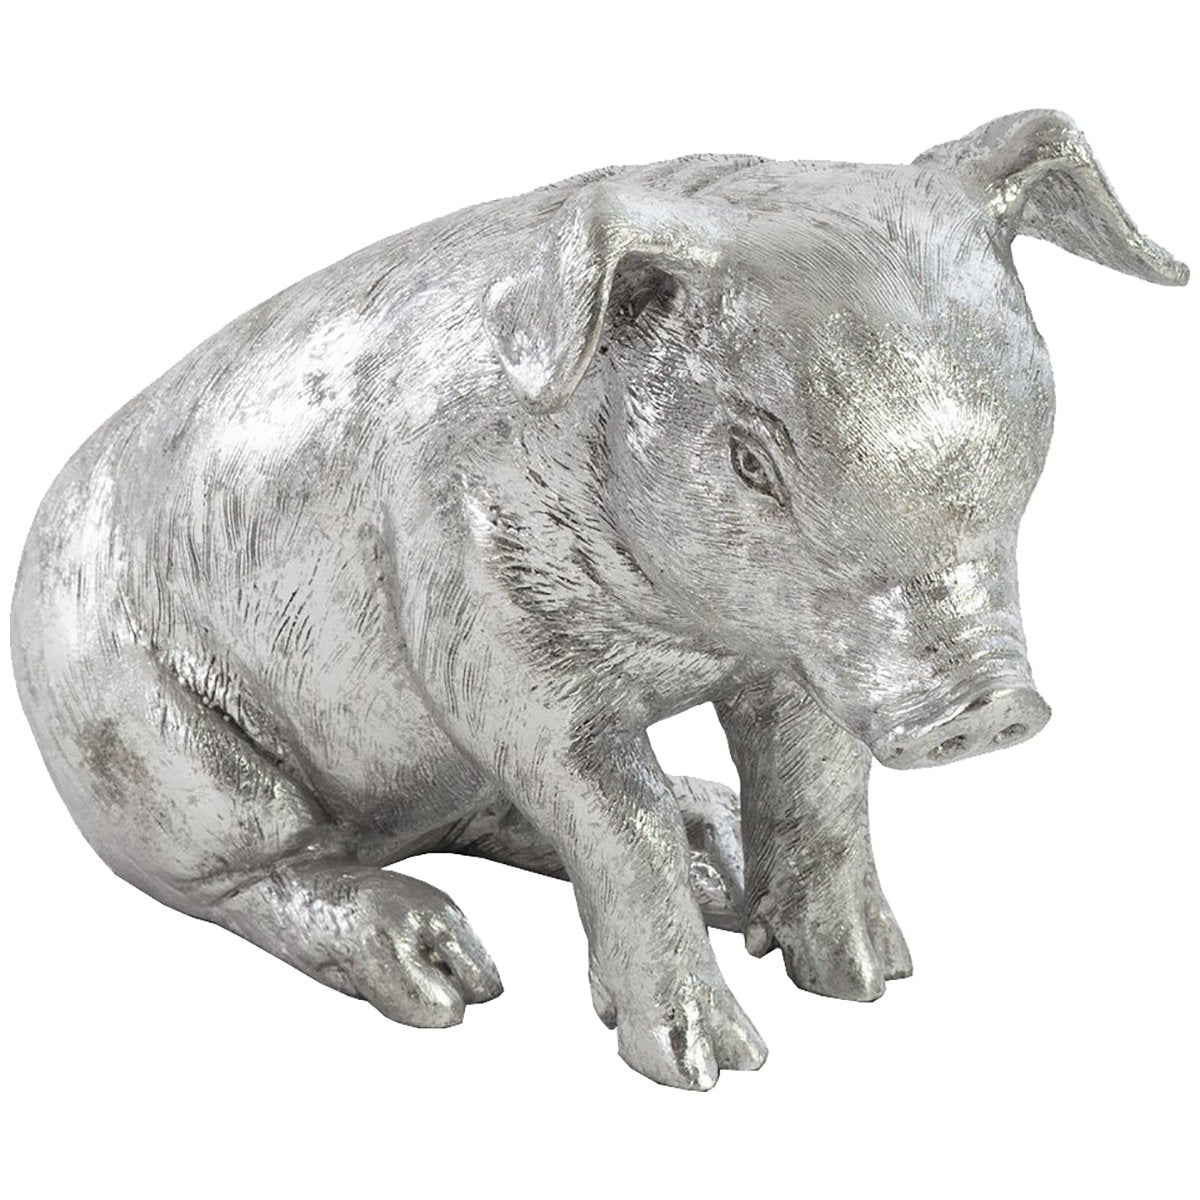 Phillips Collection Sitting Piglet Sculpture, Silver Leaf